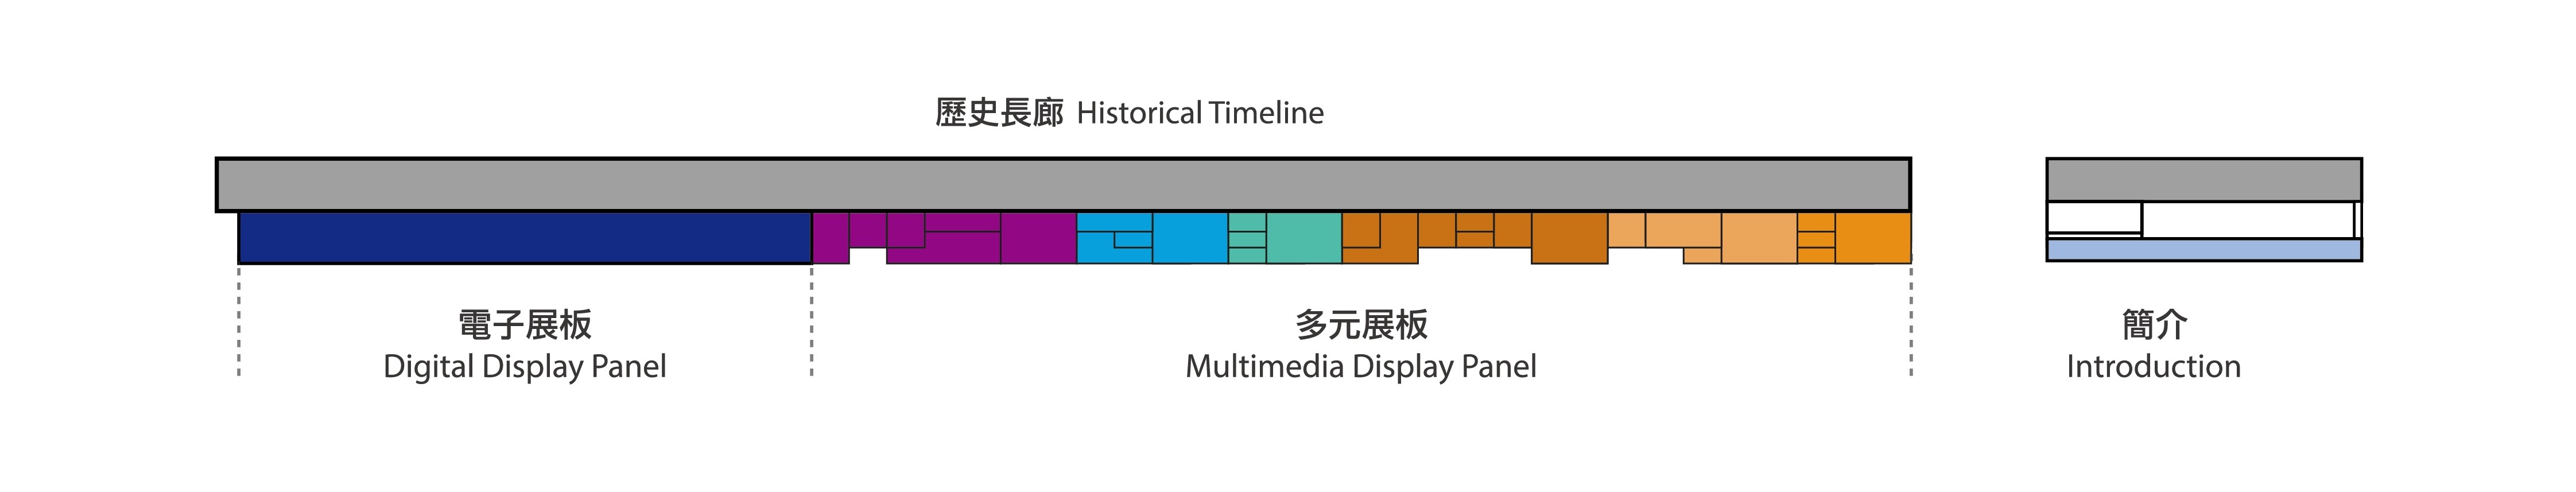 Historical Timeline floor plan